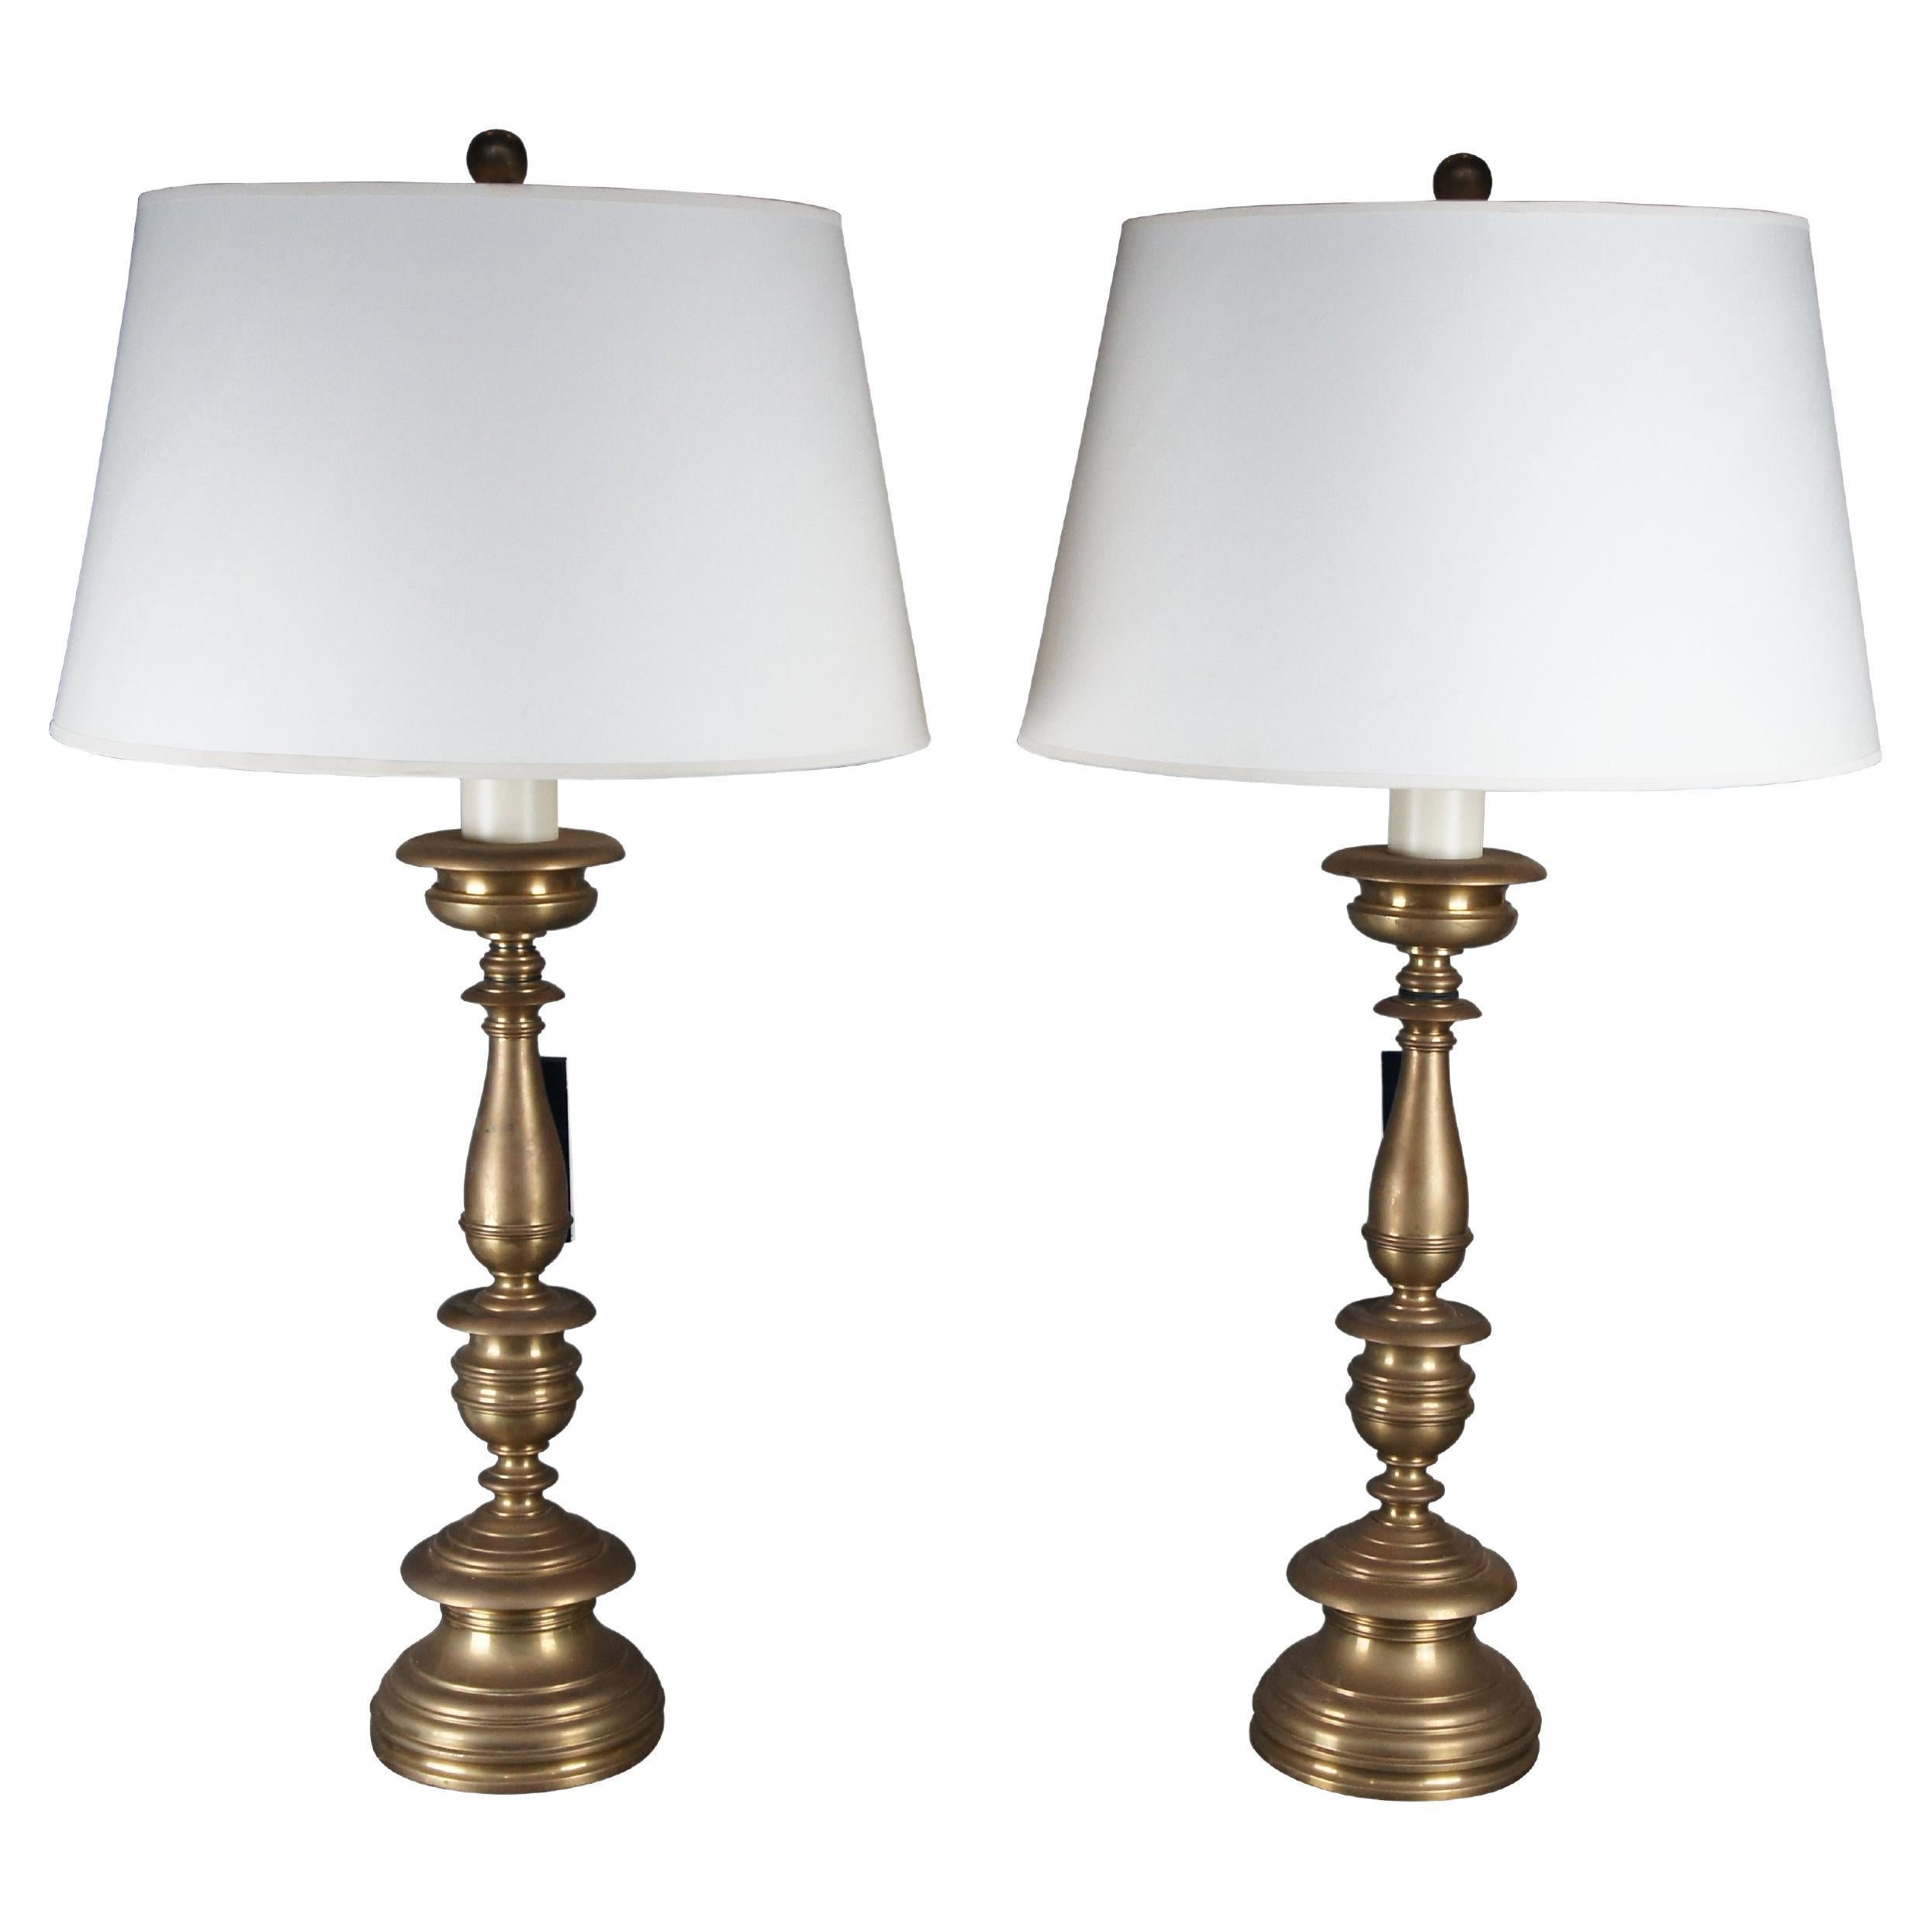 Tudor Table Lamps